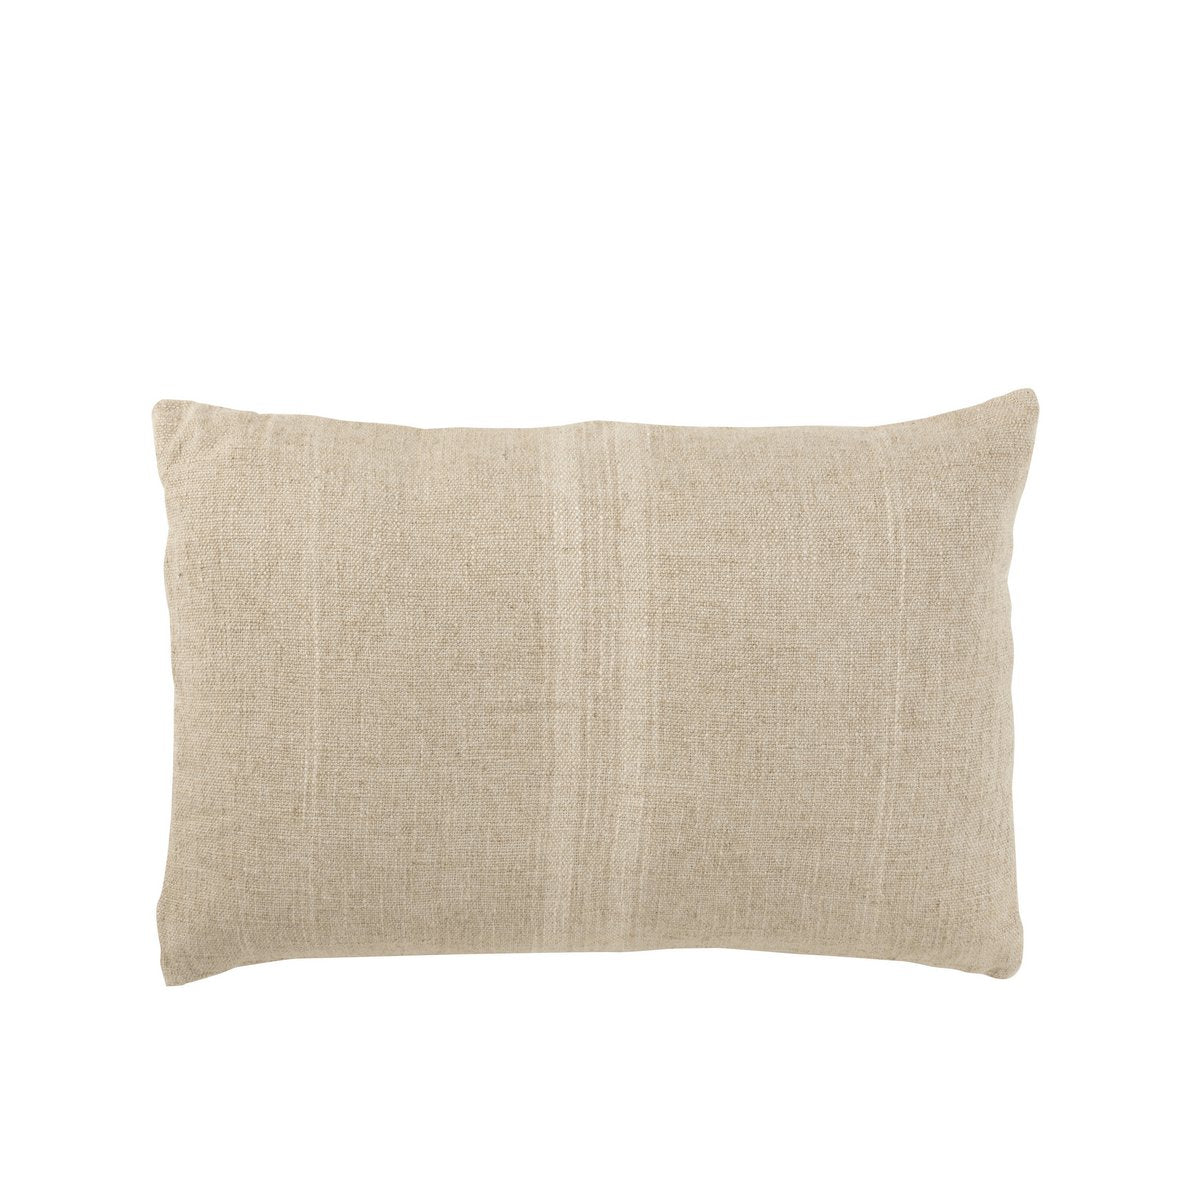 Pillow with stripes - linen, beige - long